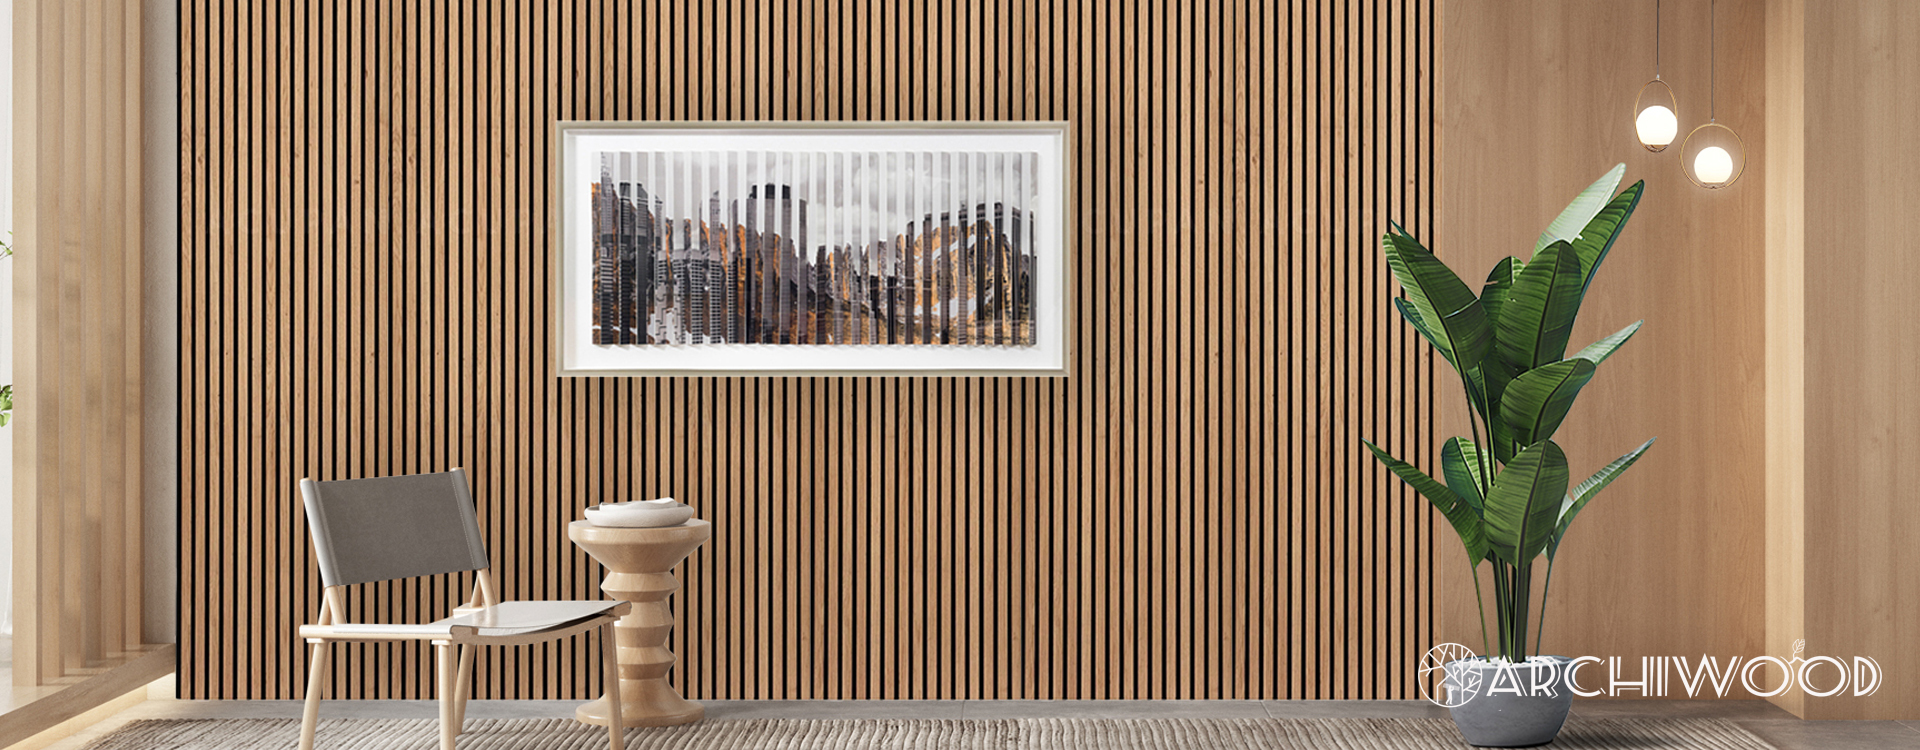 Acoustic Wooden Slats Panel